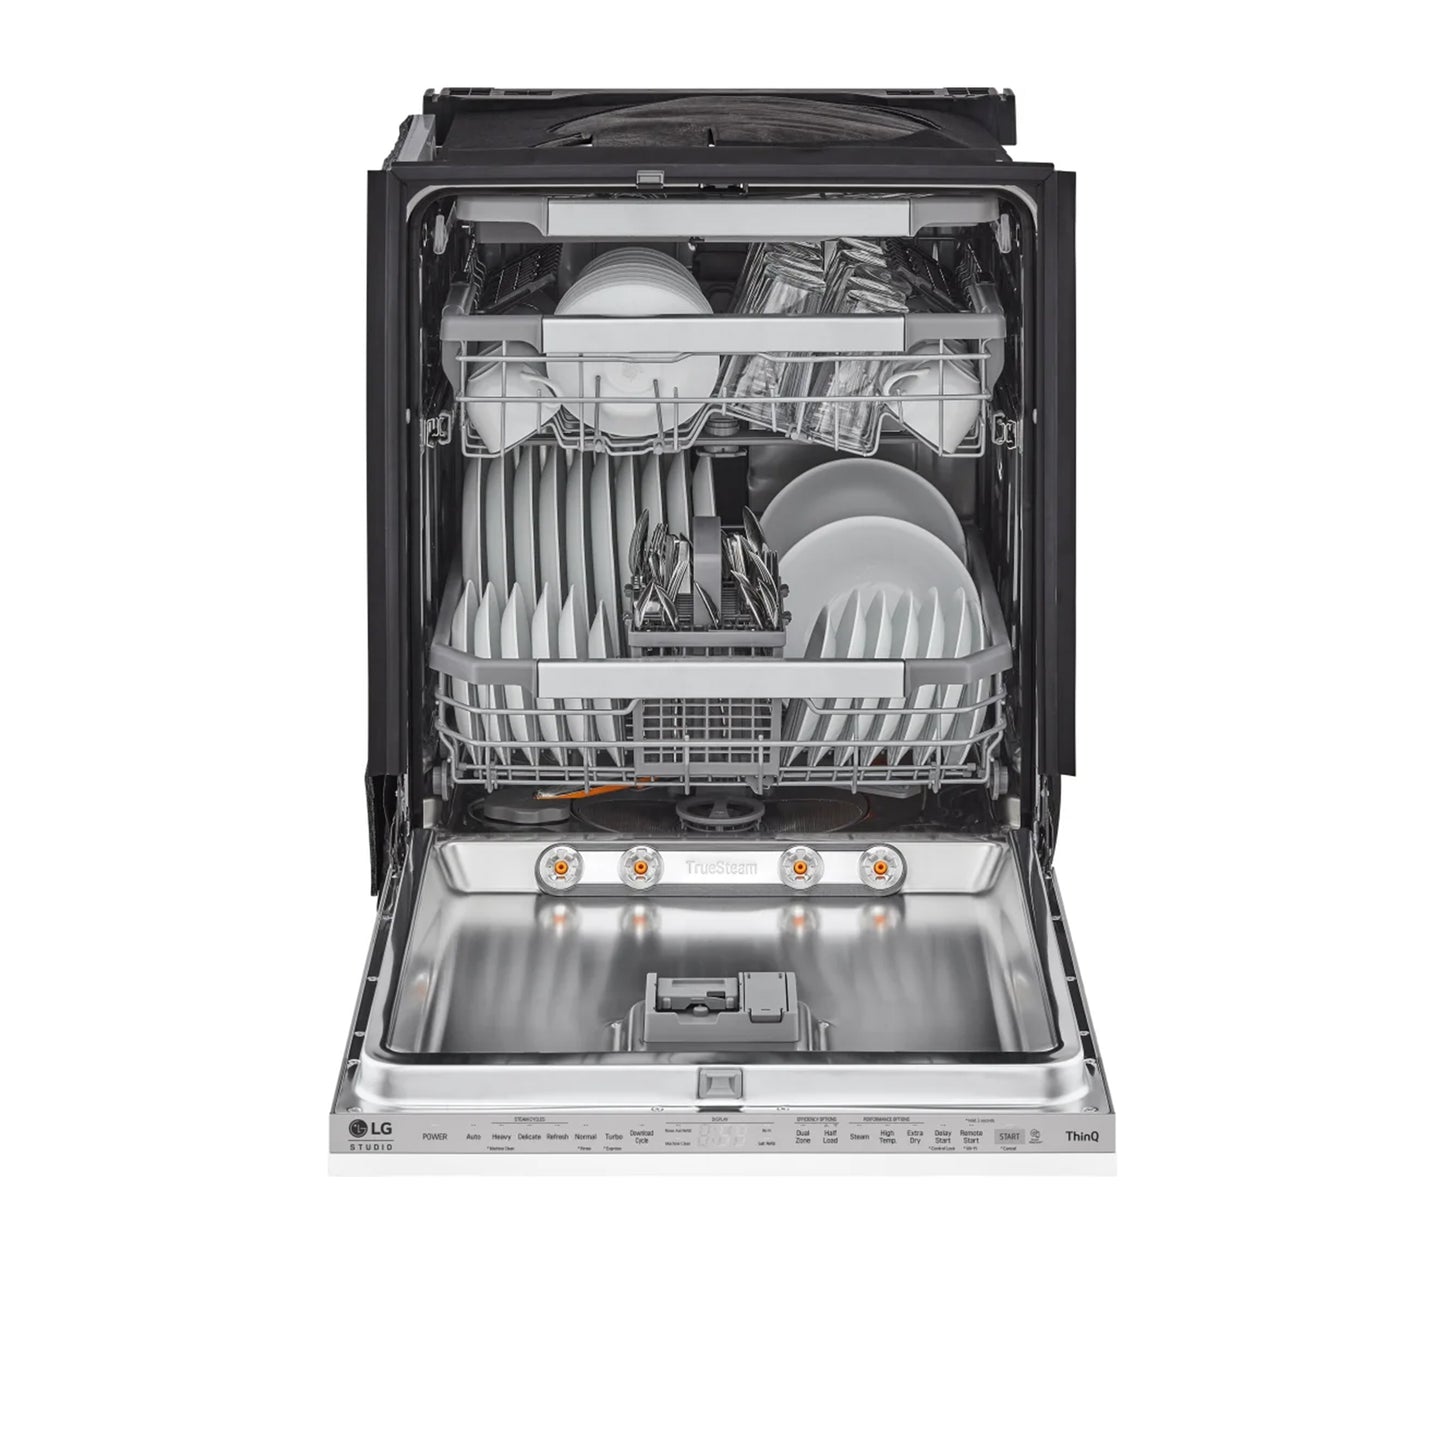 LG STUDIO Panel Ready Top Control Dishwasher with TrueSteam®